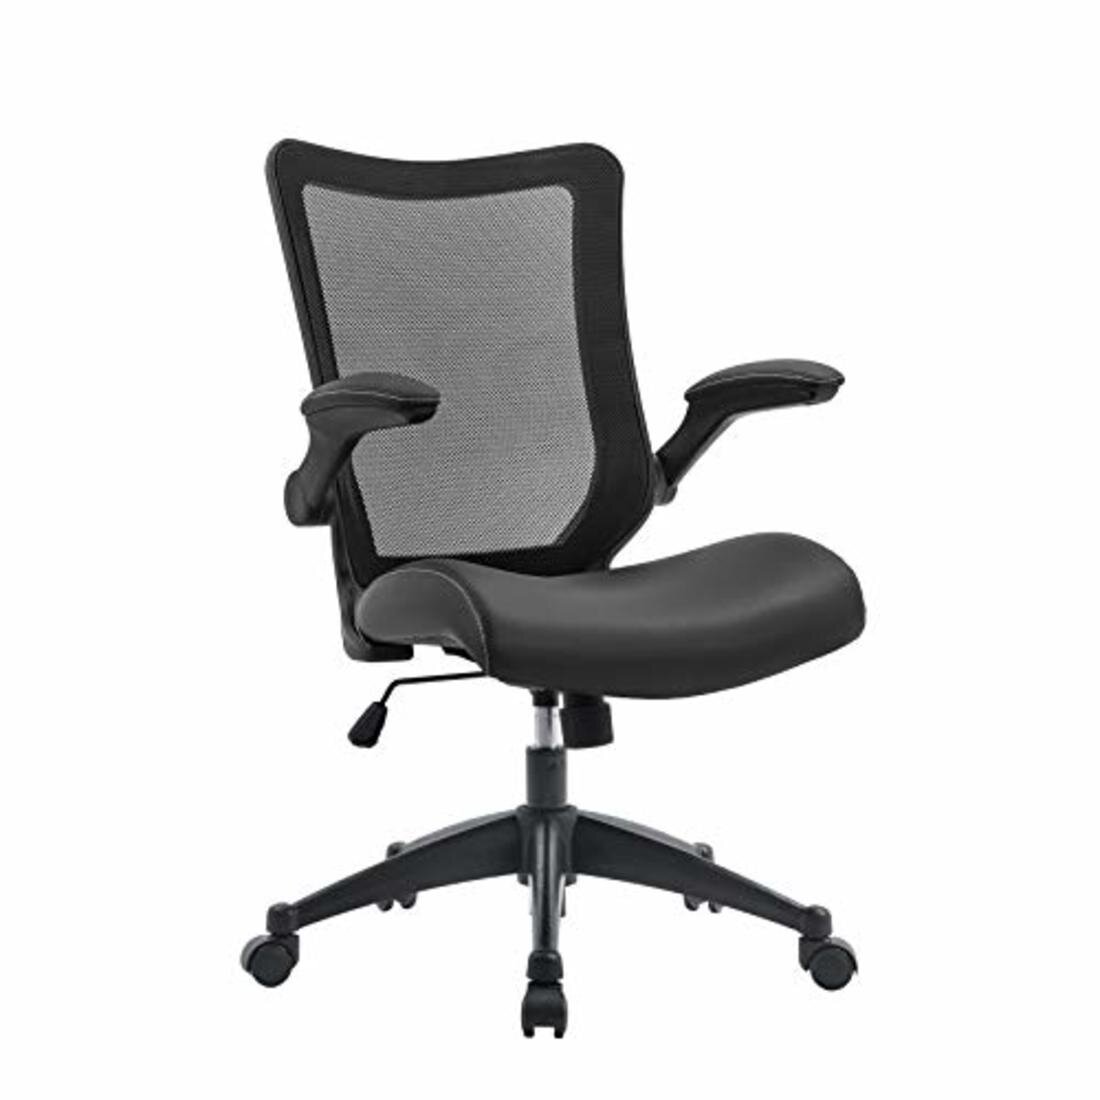 Inbox Zero Desk Chair Flip Up Arms 300 Lbs Weight Capacity Black Desk Chair Wayfair Ca